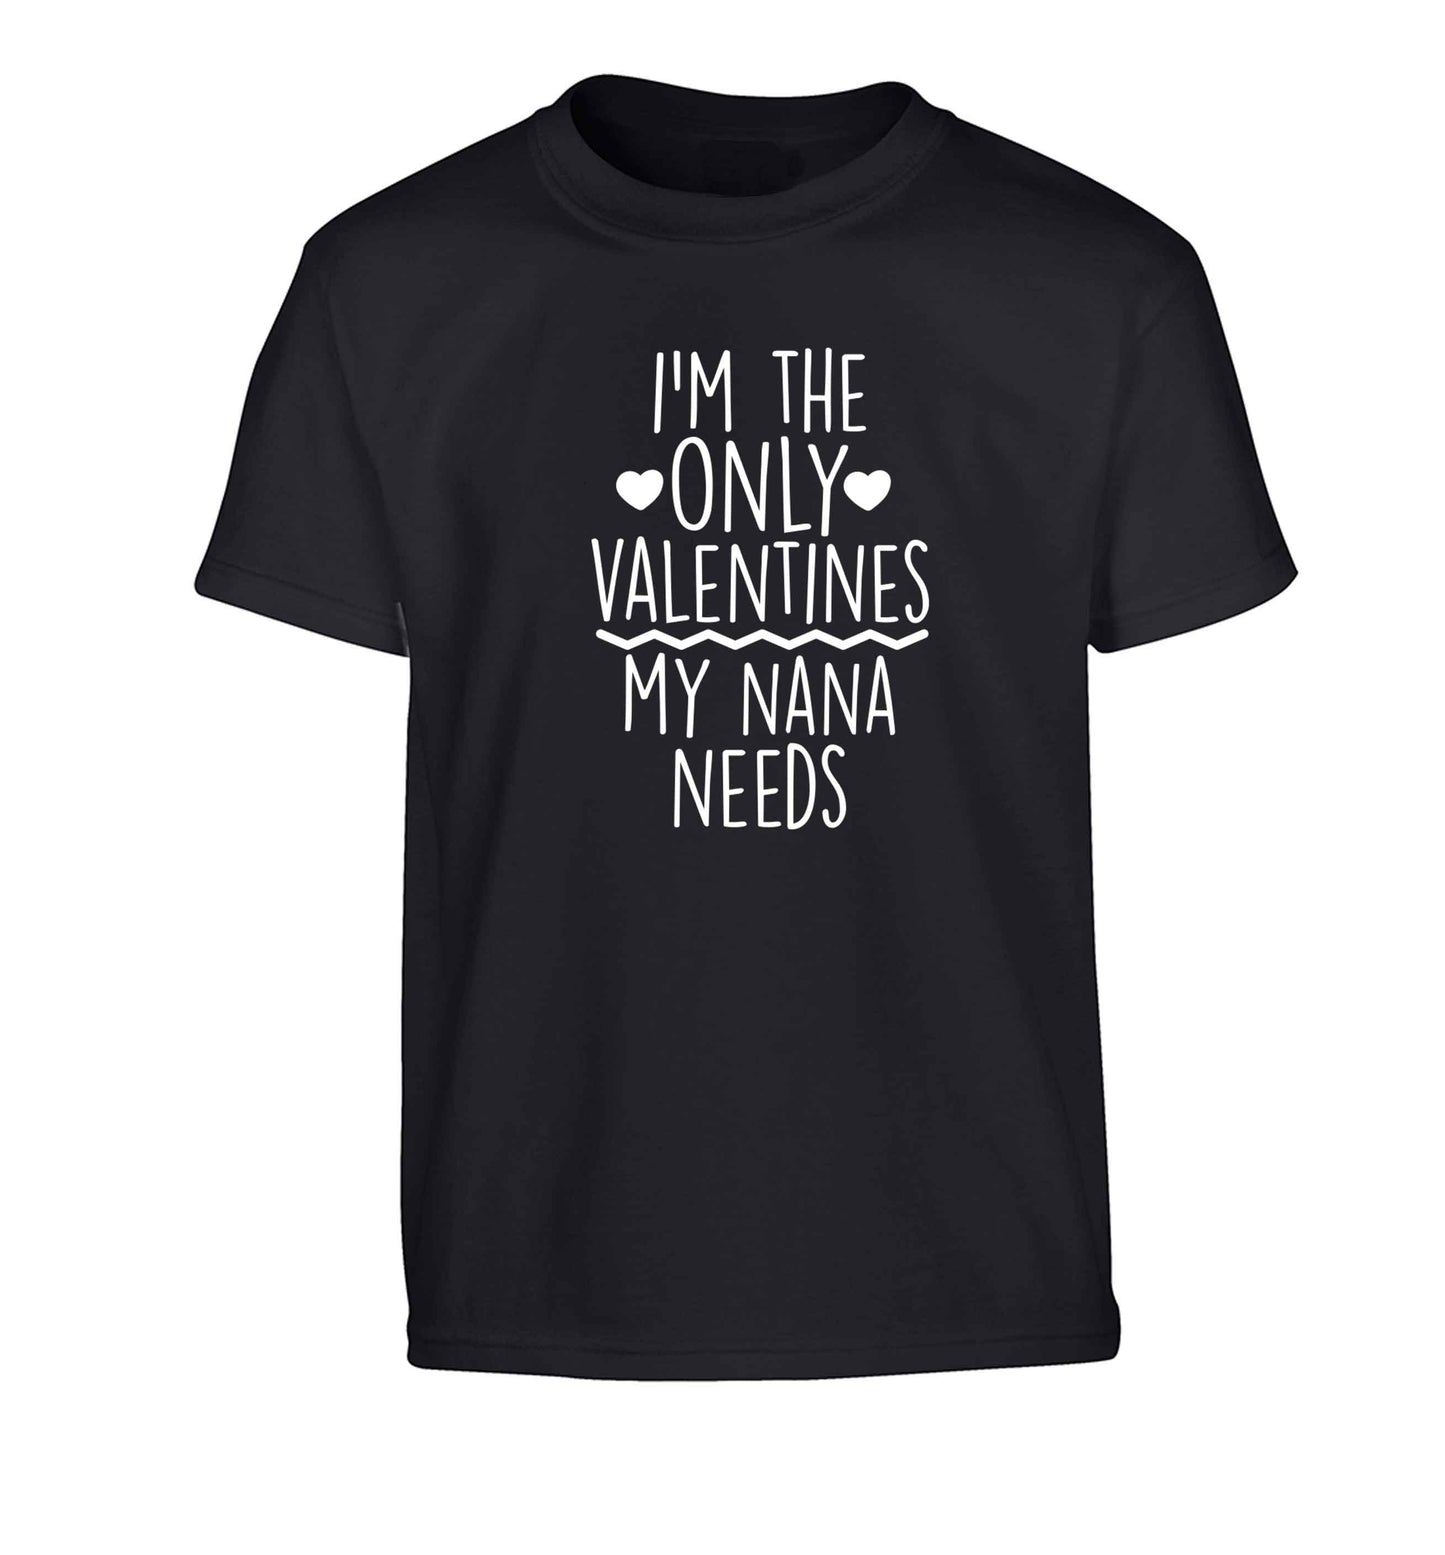 I'm the only valentines my nana needs Children's black Tshirt 12-13 Years